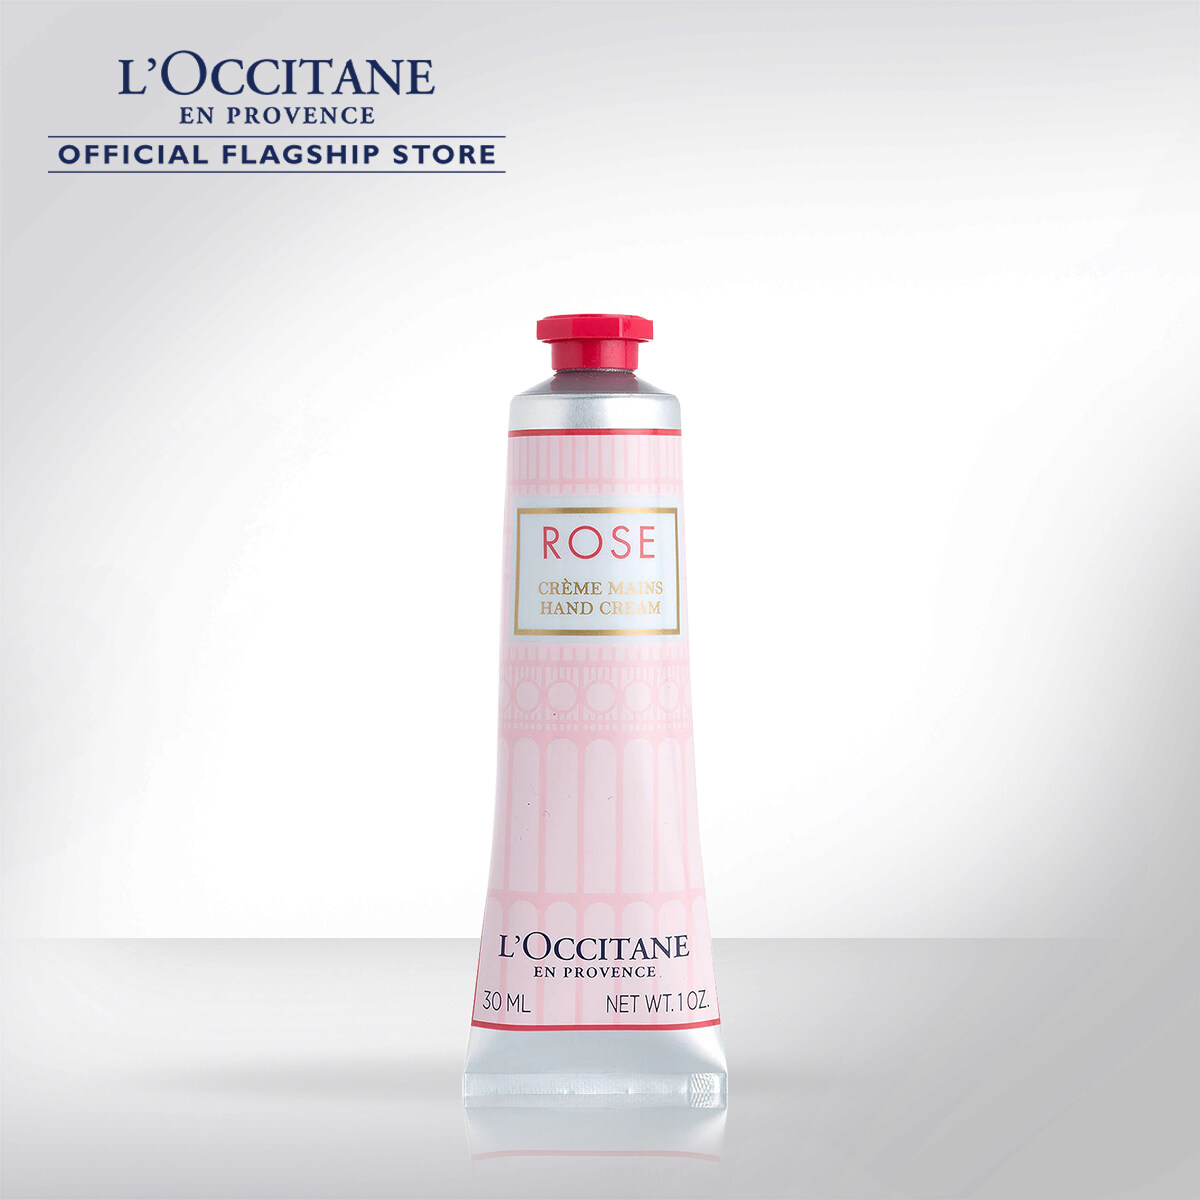 L'Occitane Rose Hand Cream 30ml ล็อกซิทาน ครีมทามือ กลิ่นกุหลาบ โรส แฮนด์ครีม 30 มล. (ทามือ, บำรุงมือ, ผิวฝ่ามือ, ดอกกุหลาบ, ชุ่มชื้น)